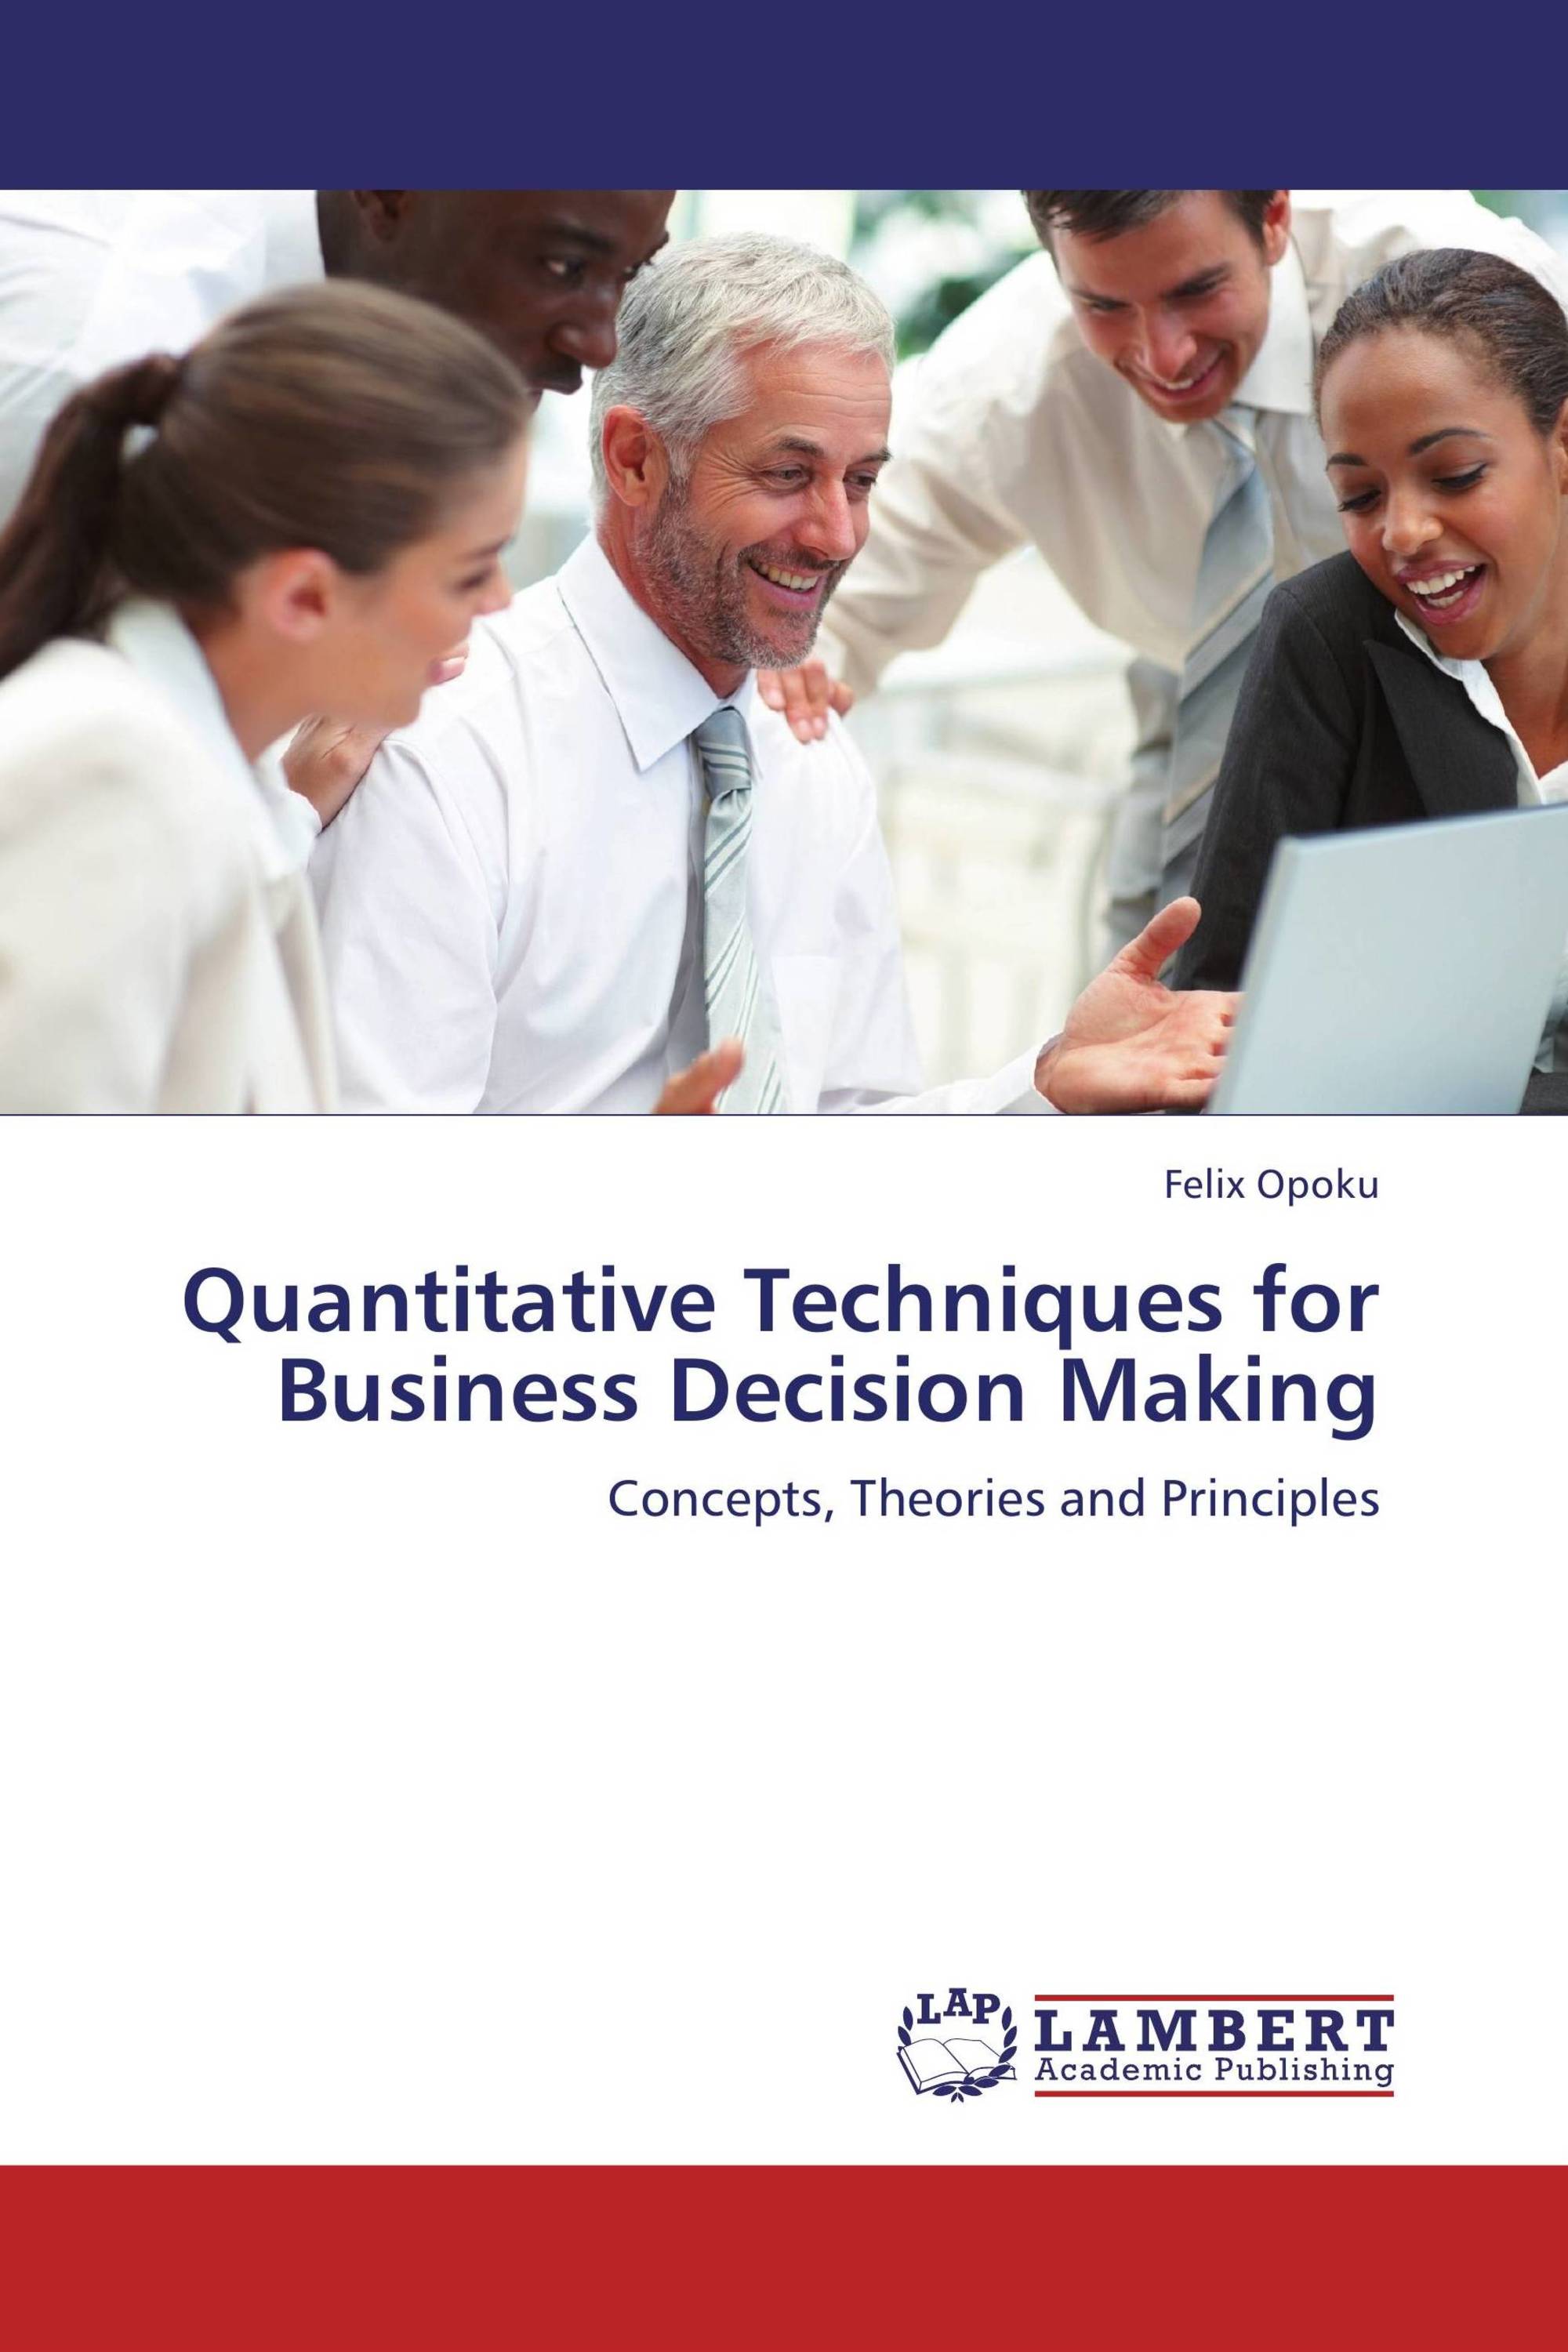 case study on quantitative techniques for decision making